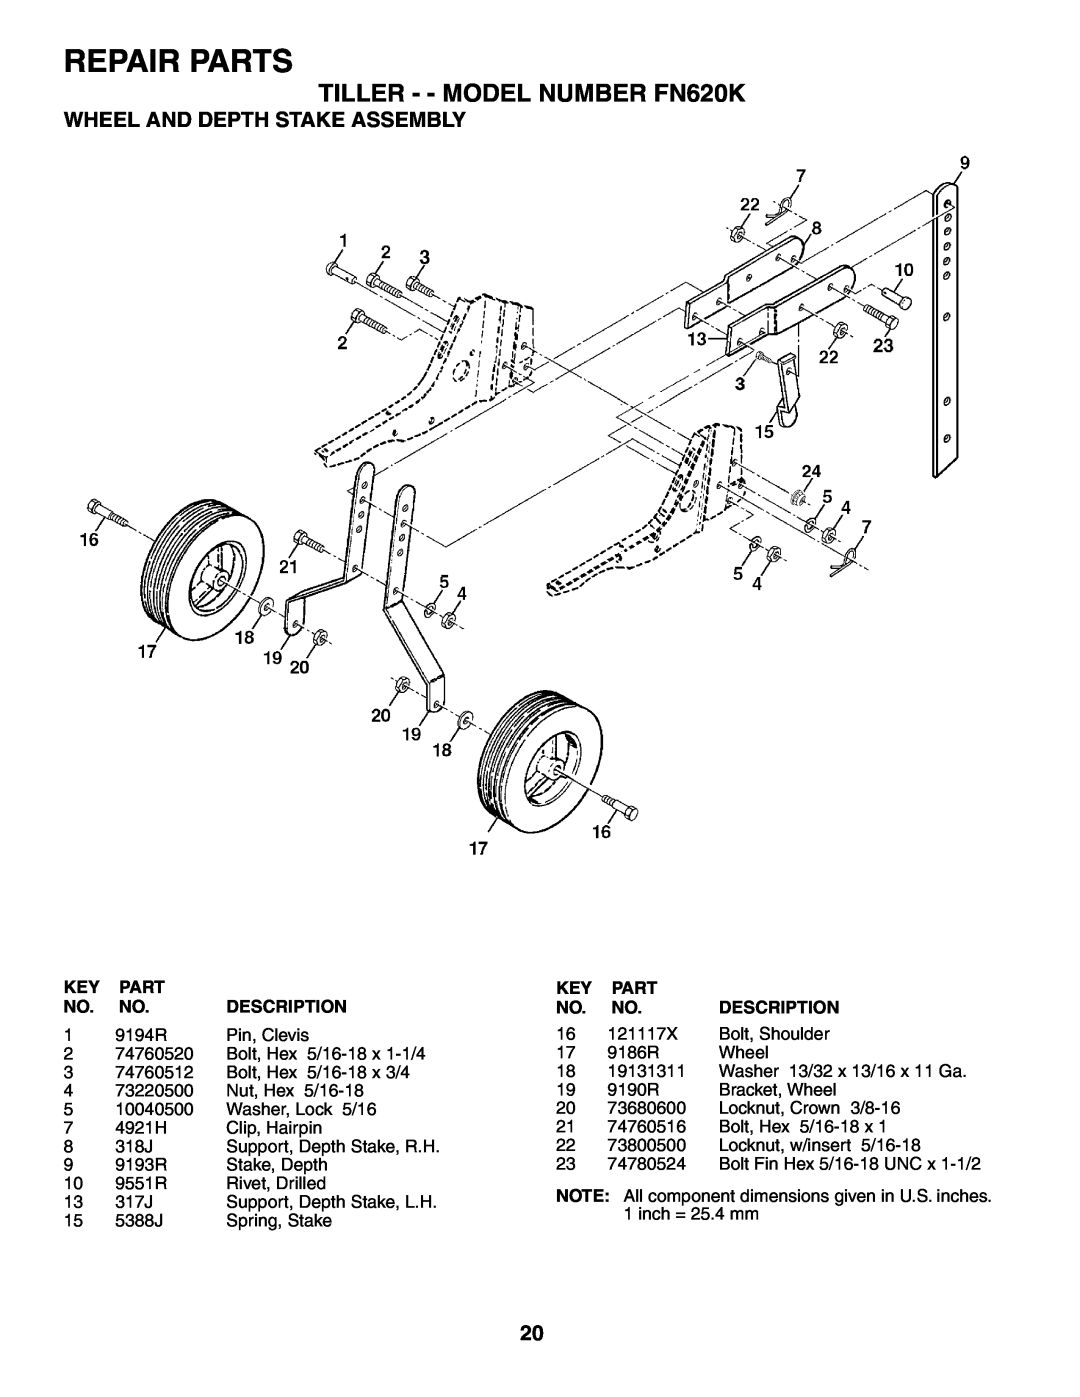 Electrolux owner manual Wheel And Depth Stake Assembly, Repair Parts, TILLER - - MODEL NUMBER FN620K 